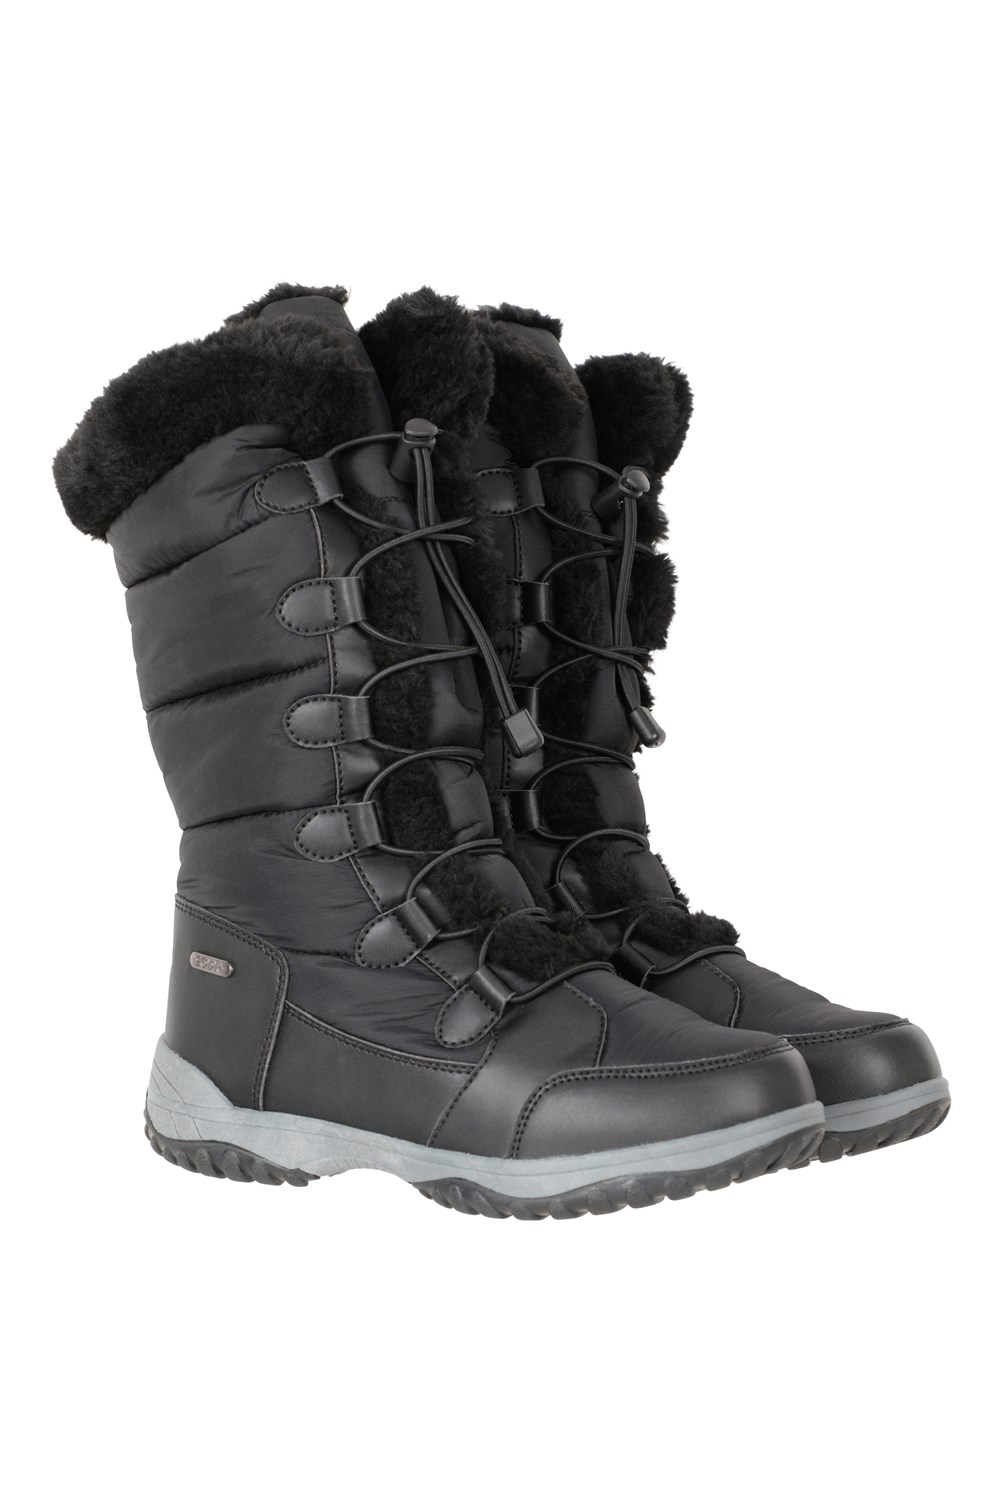 Mountain Warehouse Snowflake Women's Snow Boots Waterproof Winter ...